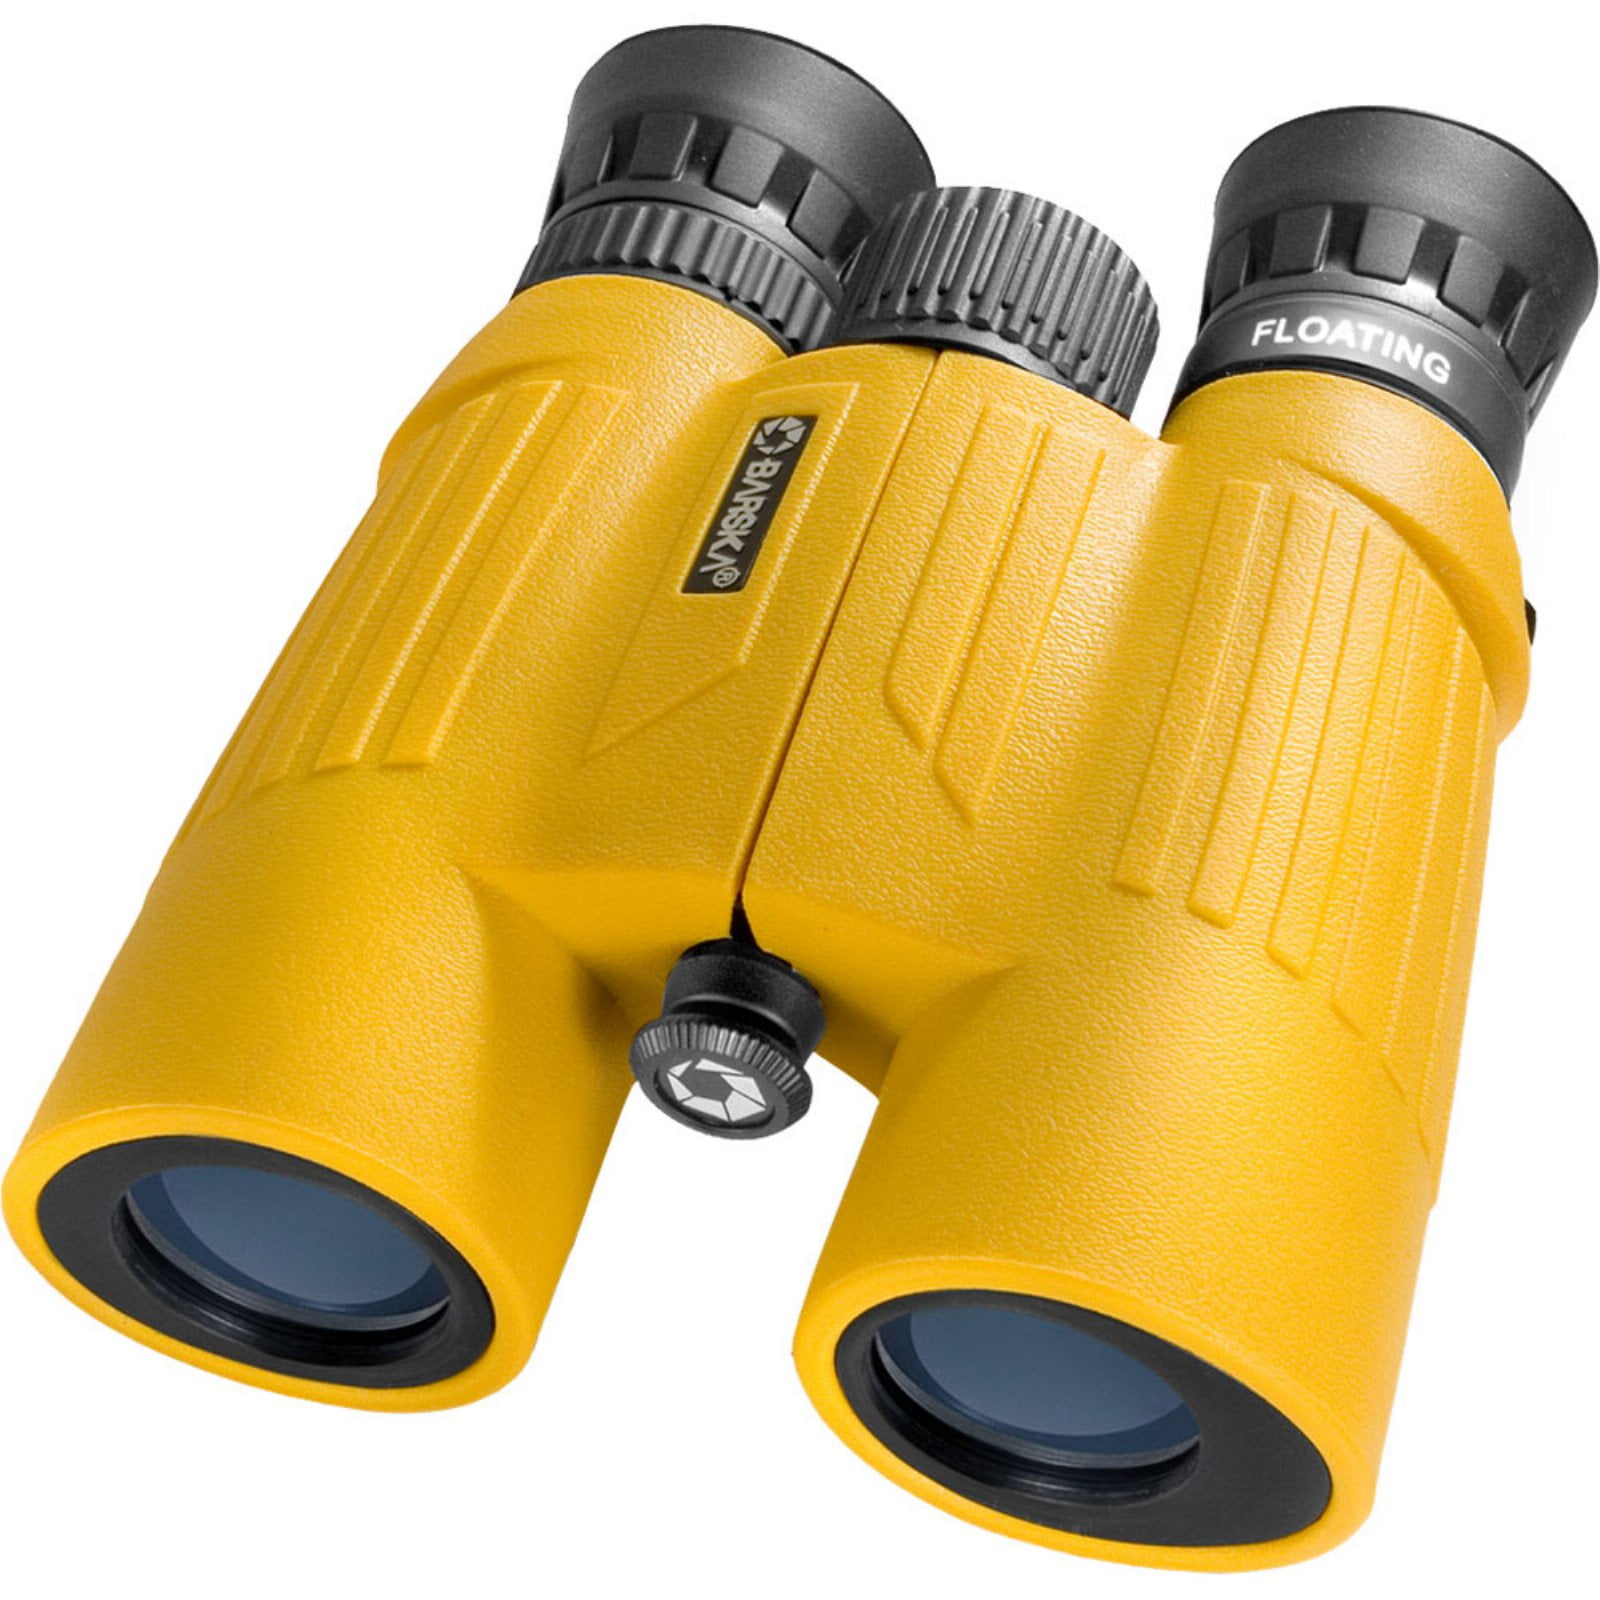 Yellow Barska 7x50 WP Floatmaster Floating Binoculars 